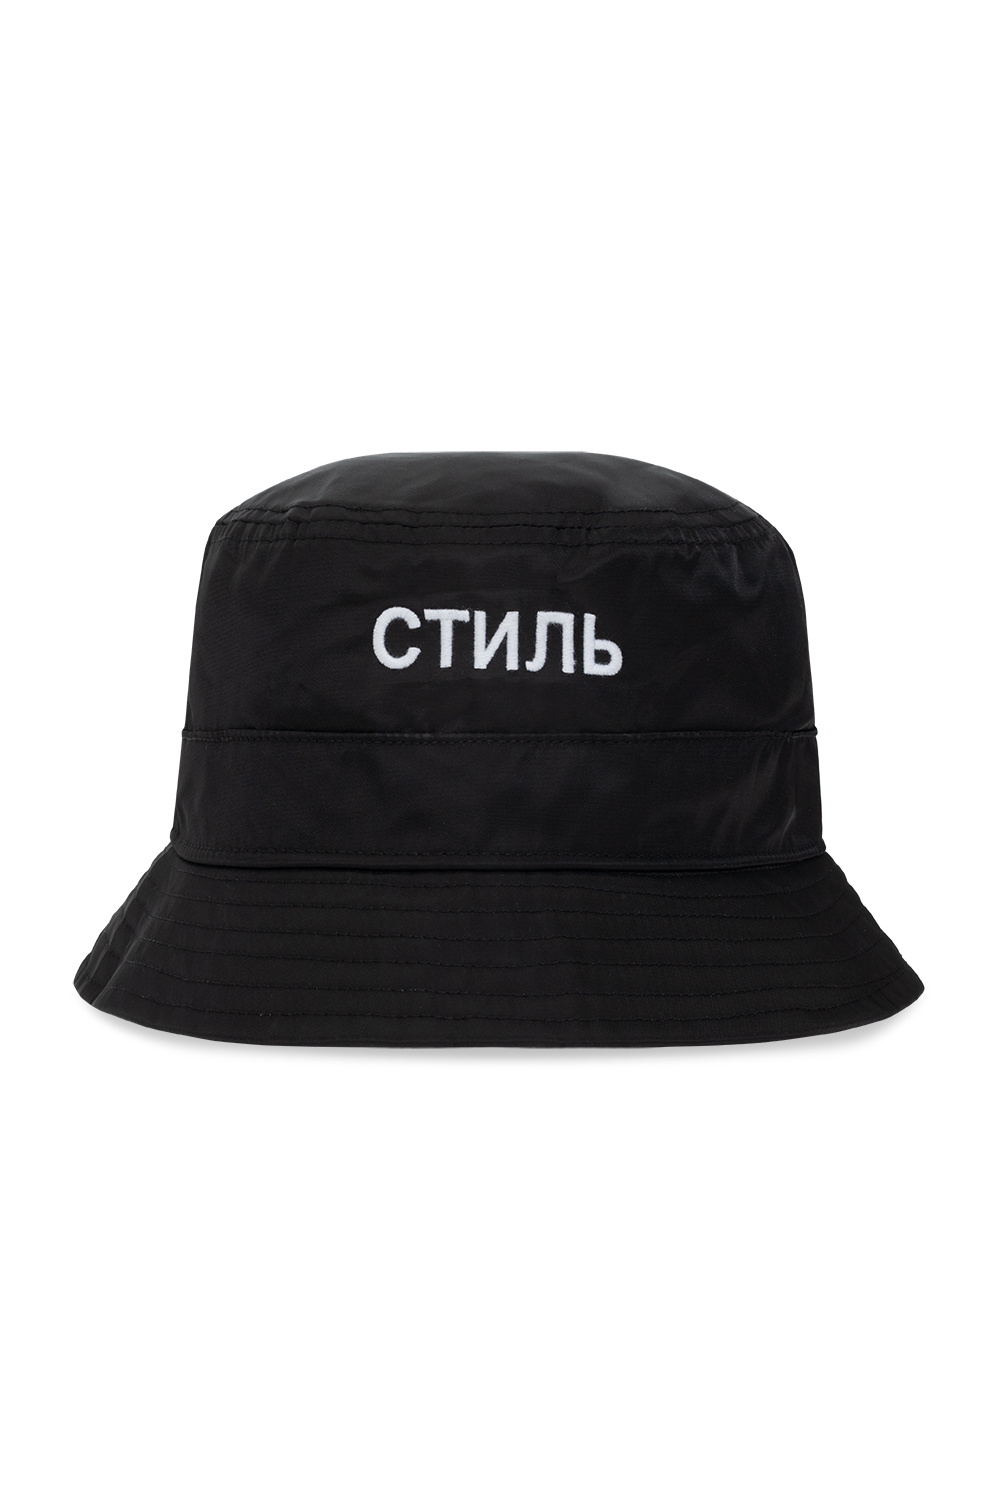 Biname-fmedShops | Lonsdale Wigston Cap | Heron Preston Bucket hat with  logo | Men\'s Accessories